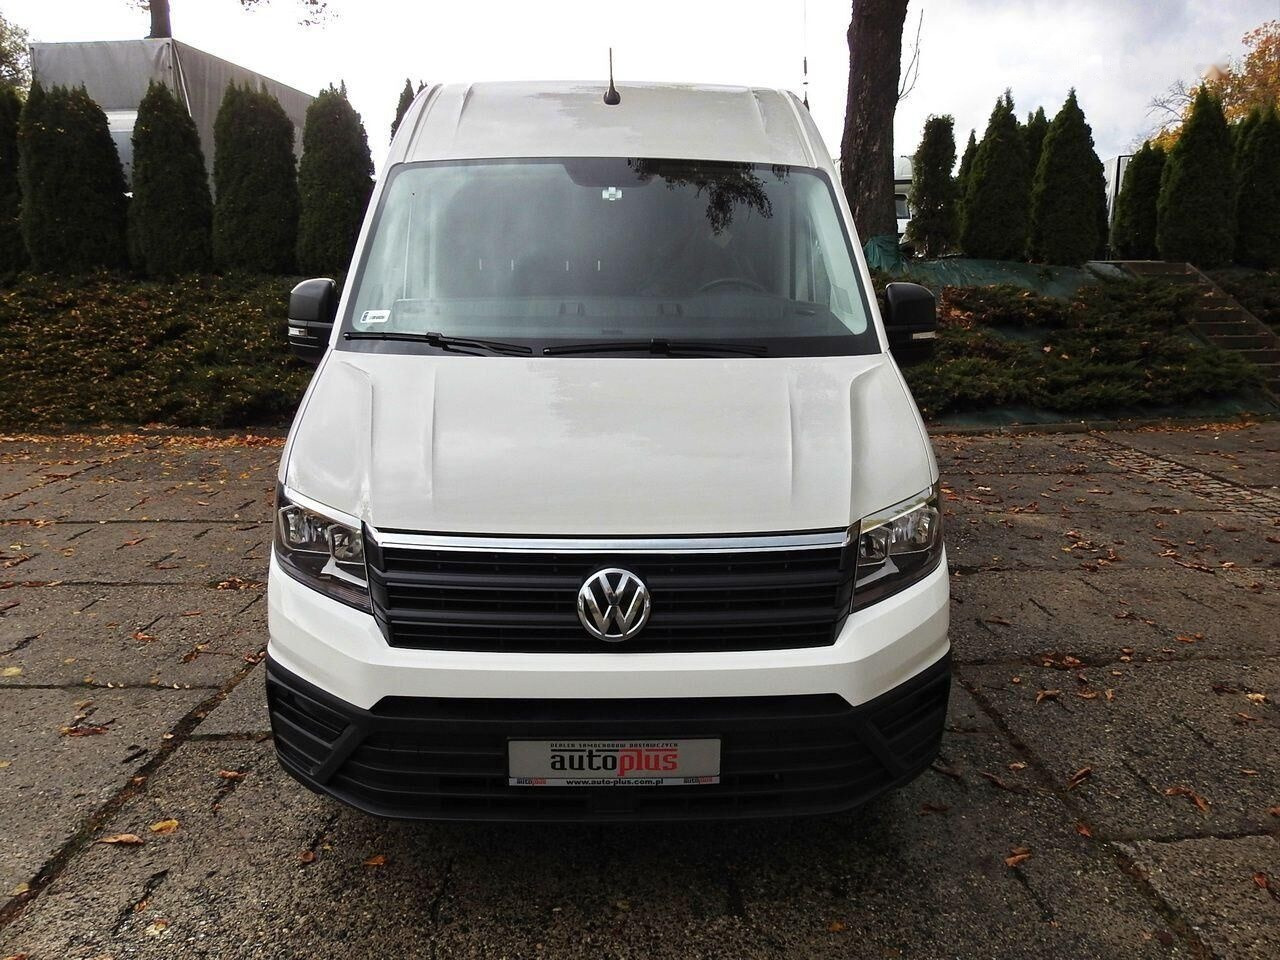 Leasing Angebot für Volkswagen Crafter Van Volkswagen Crafter Van: das Bild 2